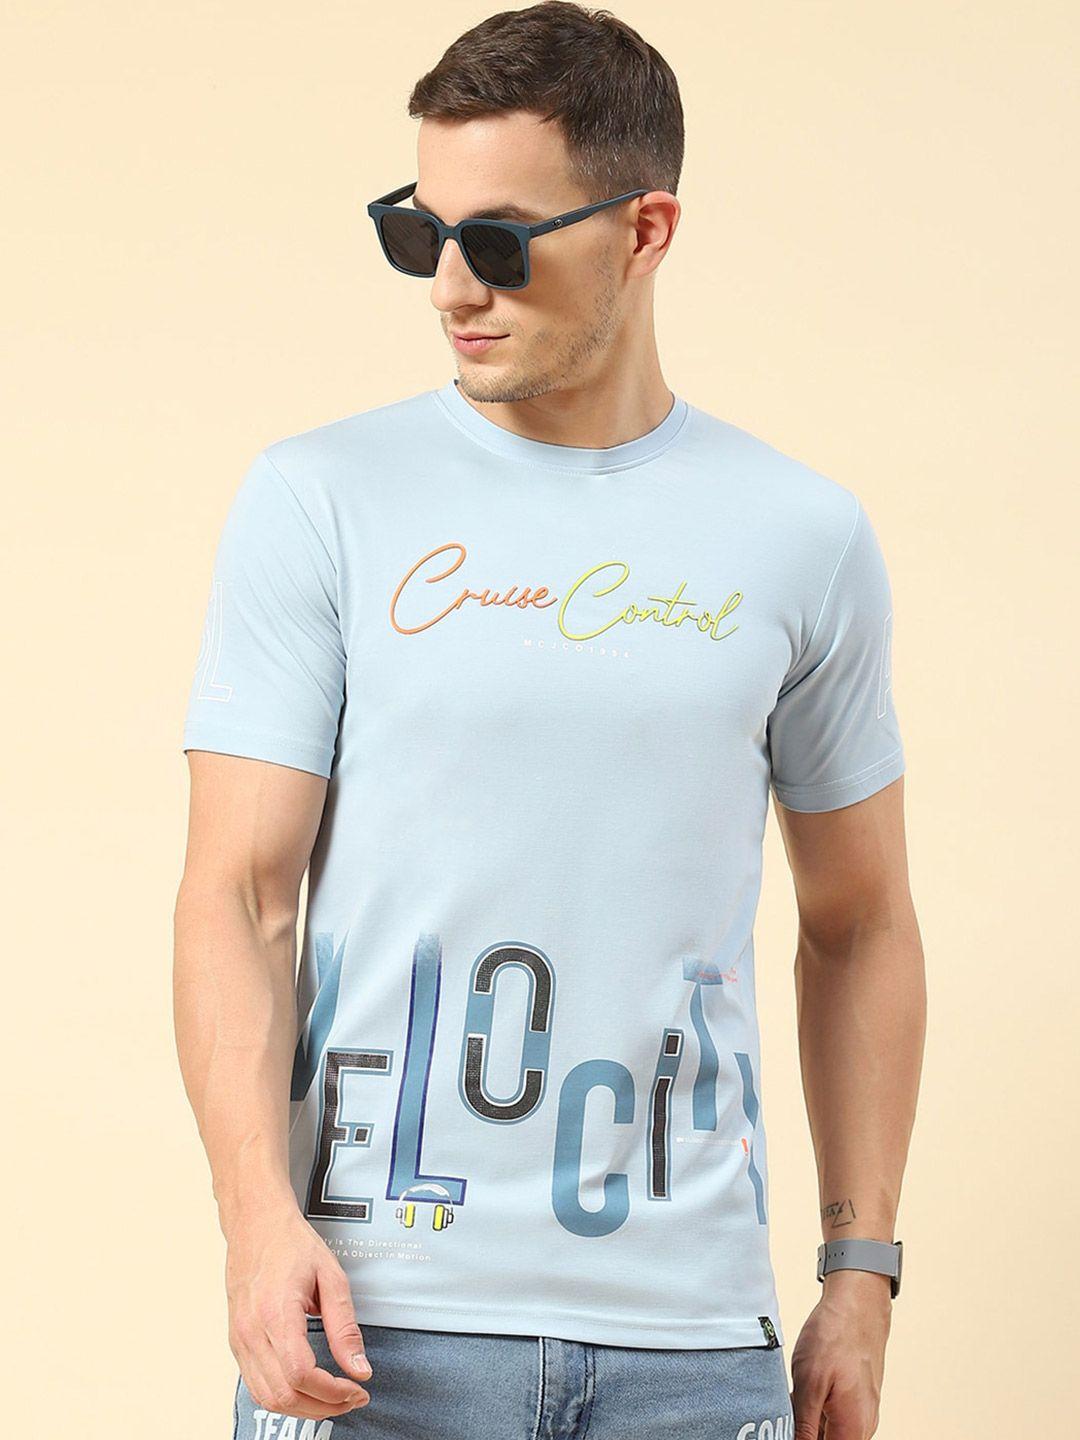 monte carlo typography printed round neck t-shirt